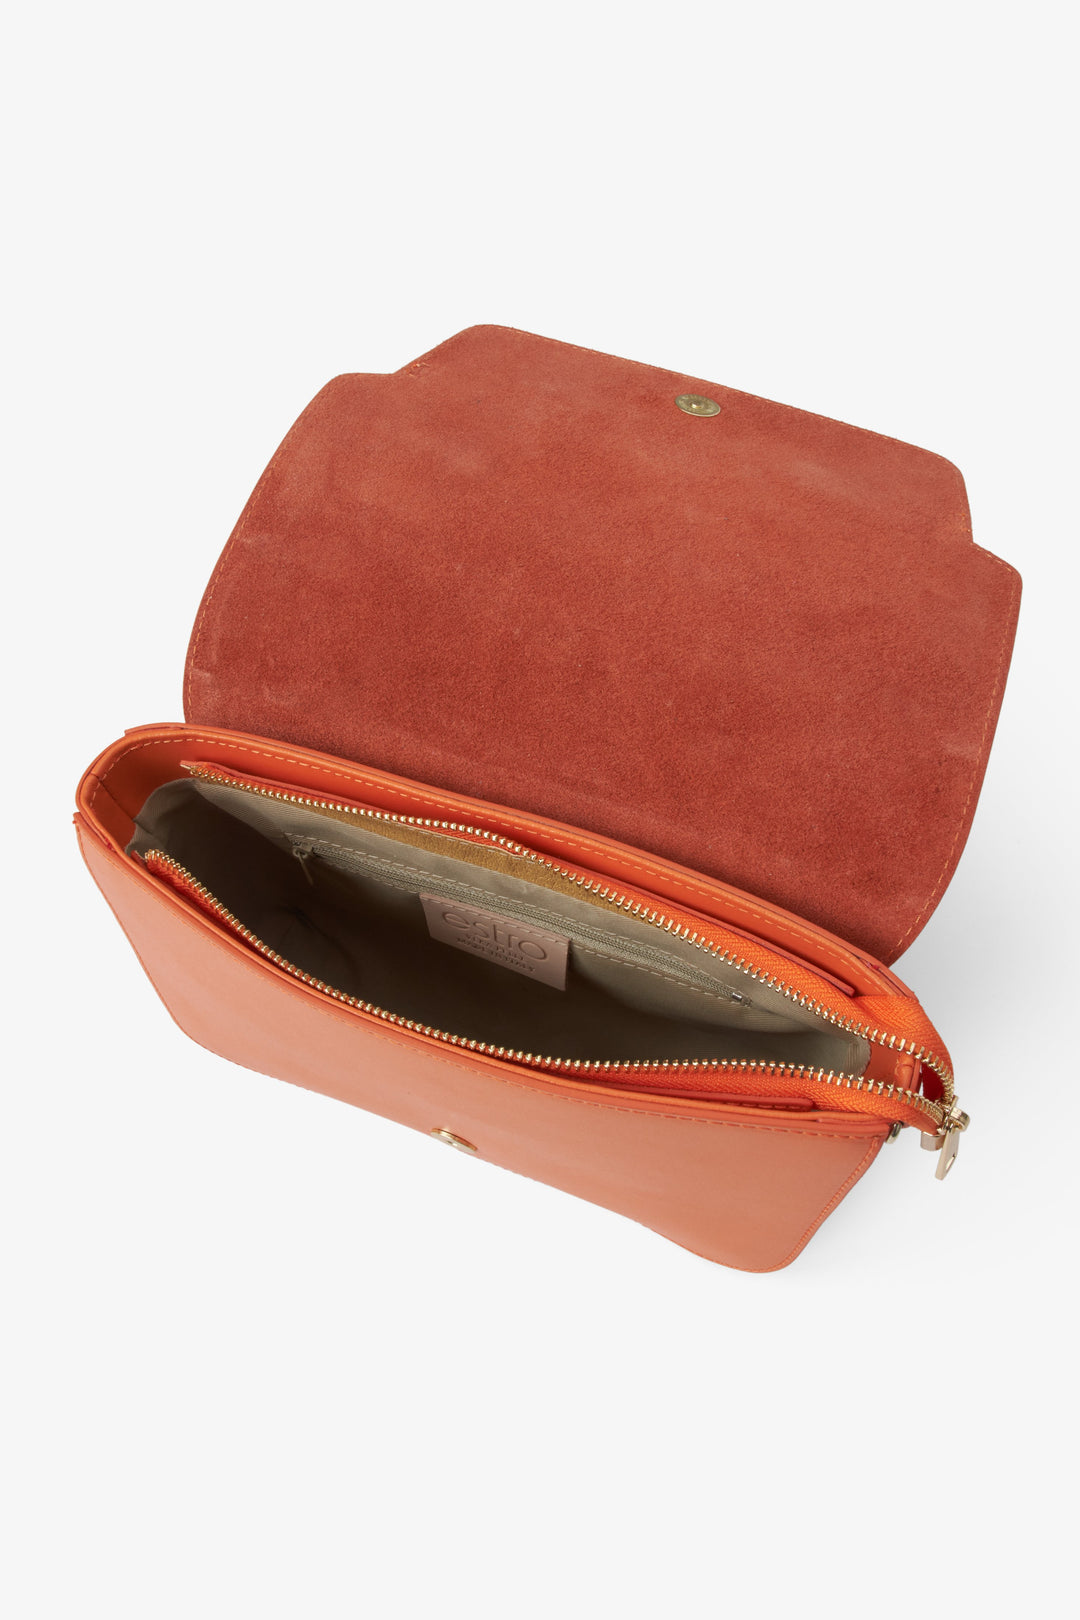 Women's orange shoulder bag in Italian natural leather - textile lining.